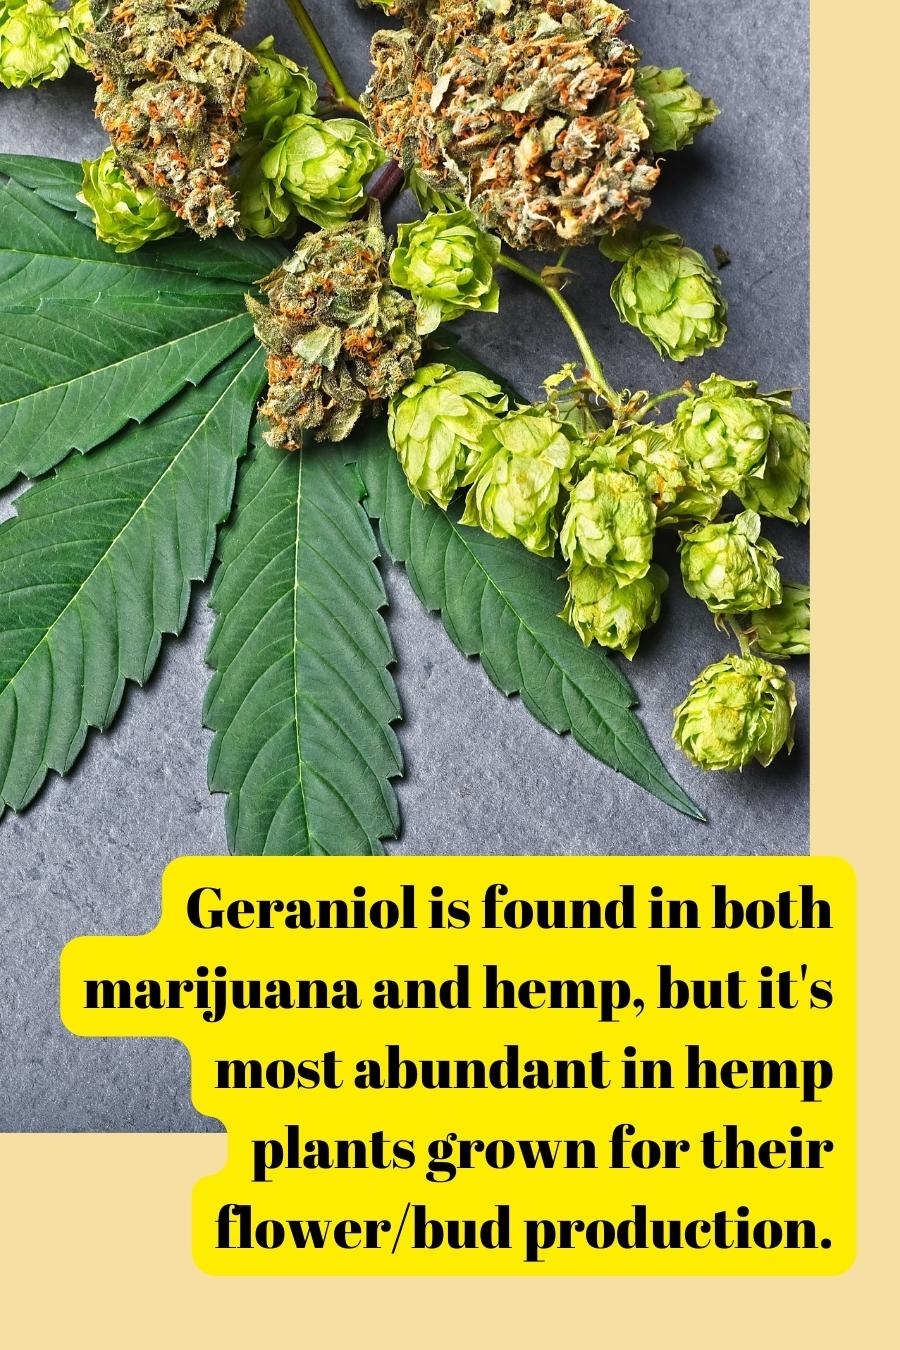 Geraniol is found in both marijuana and hemp, but it's most abundant in hemp plants grown for their flower/bud production.